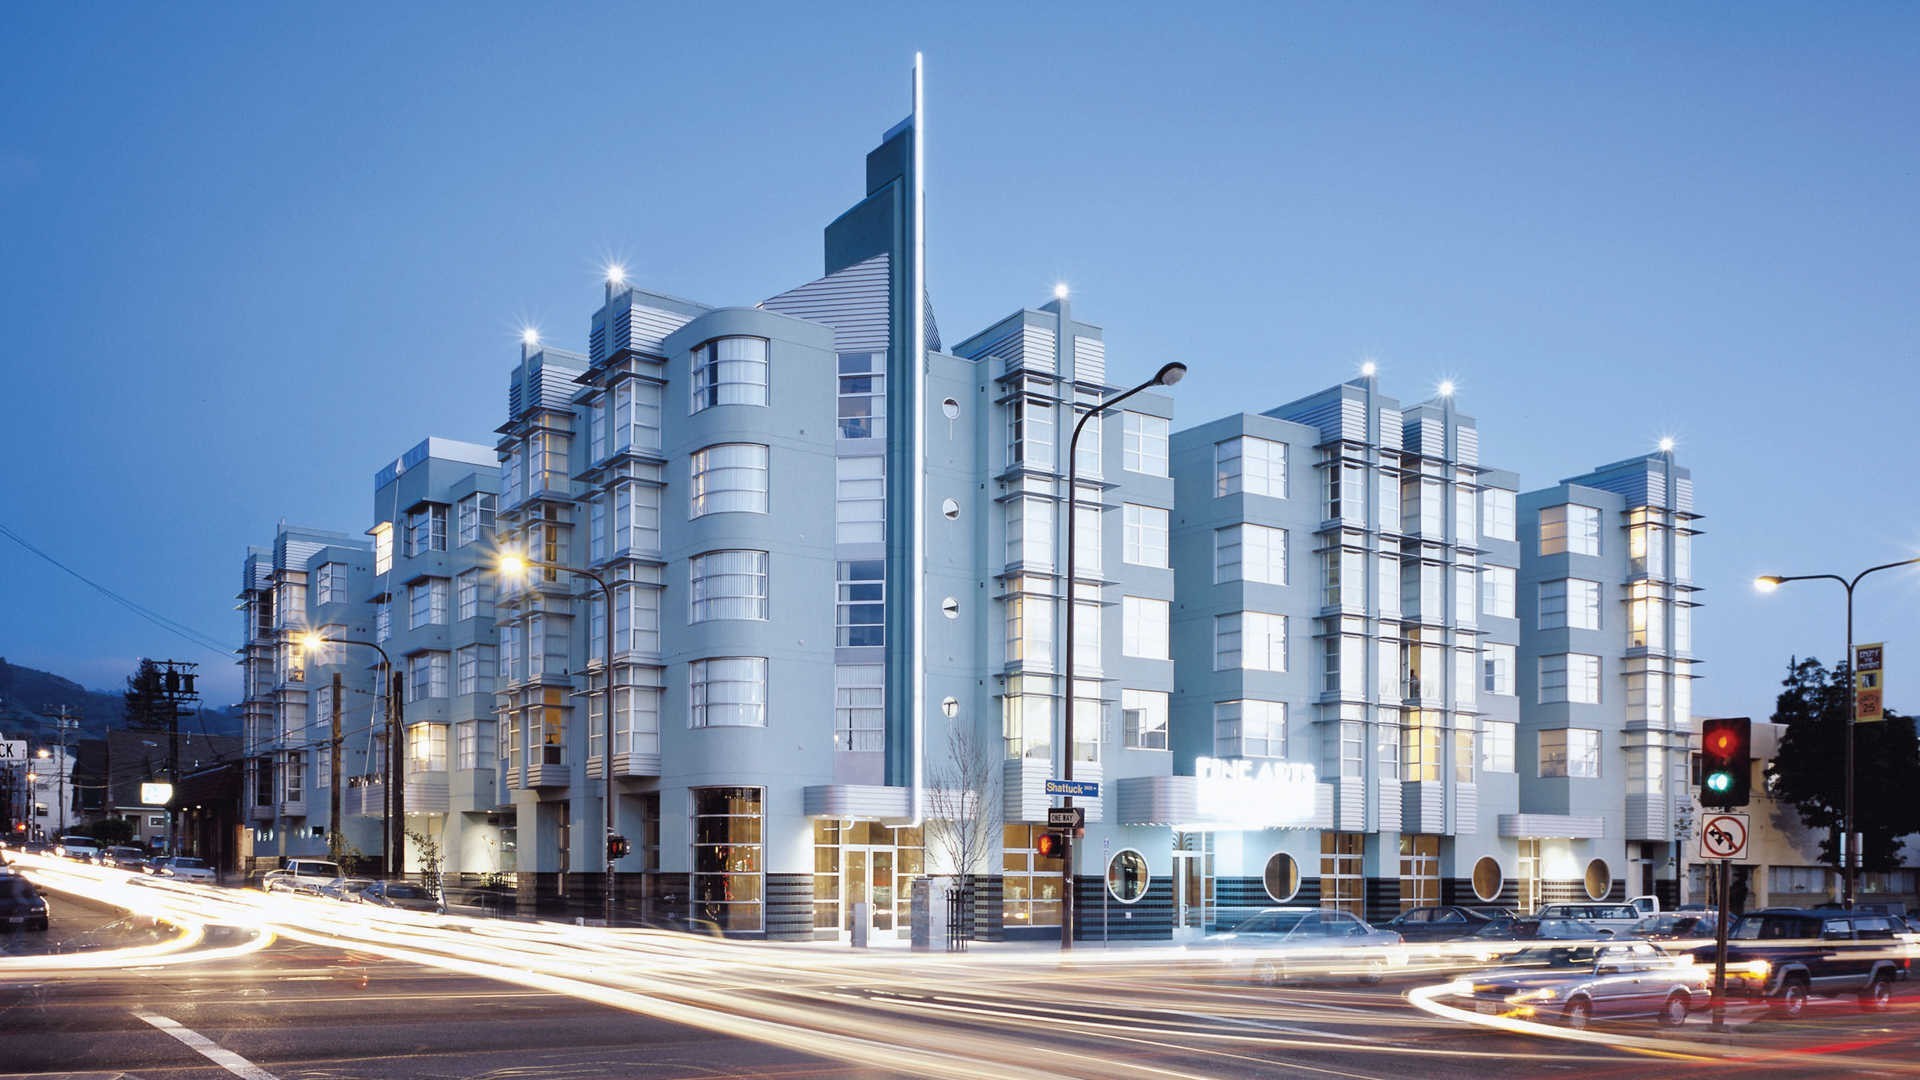 Berkeley Apartments – Fine Arts